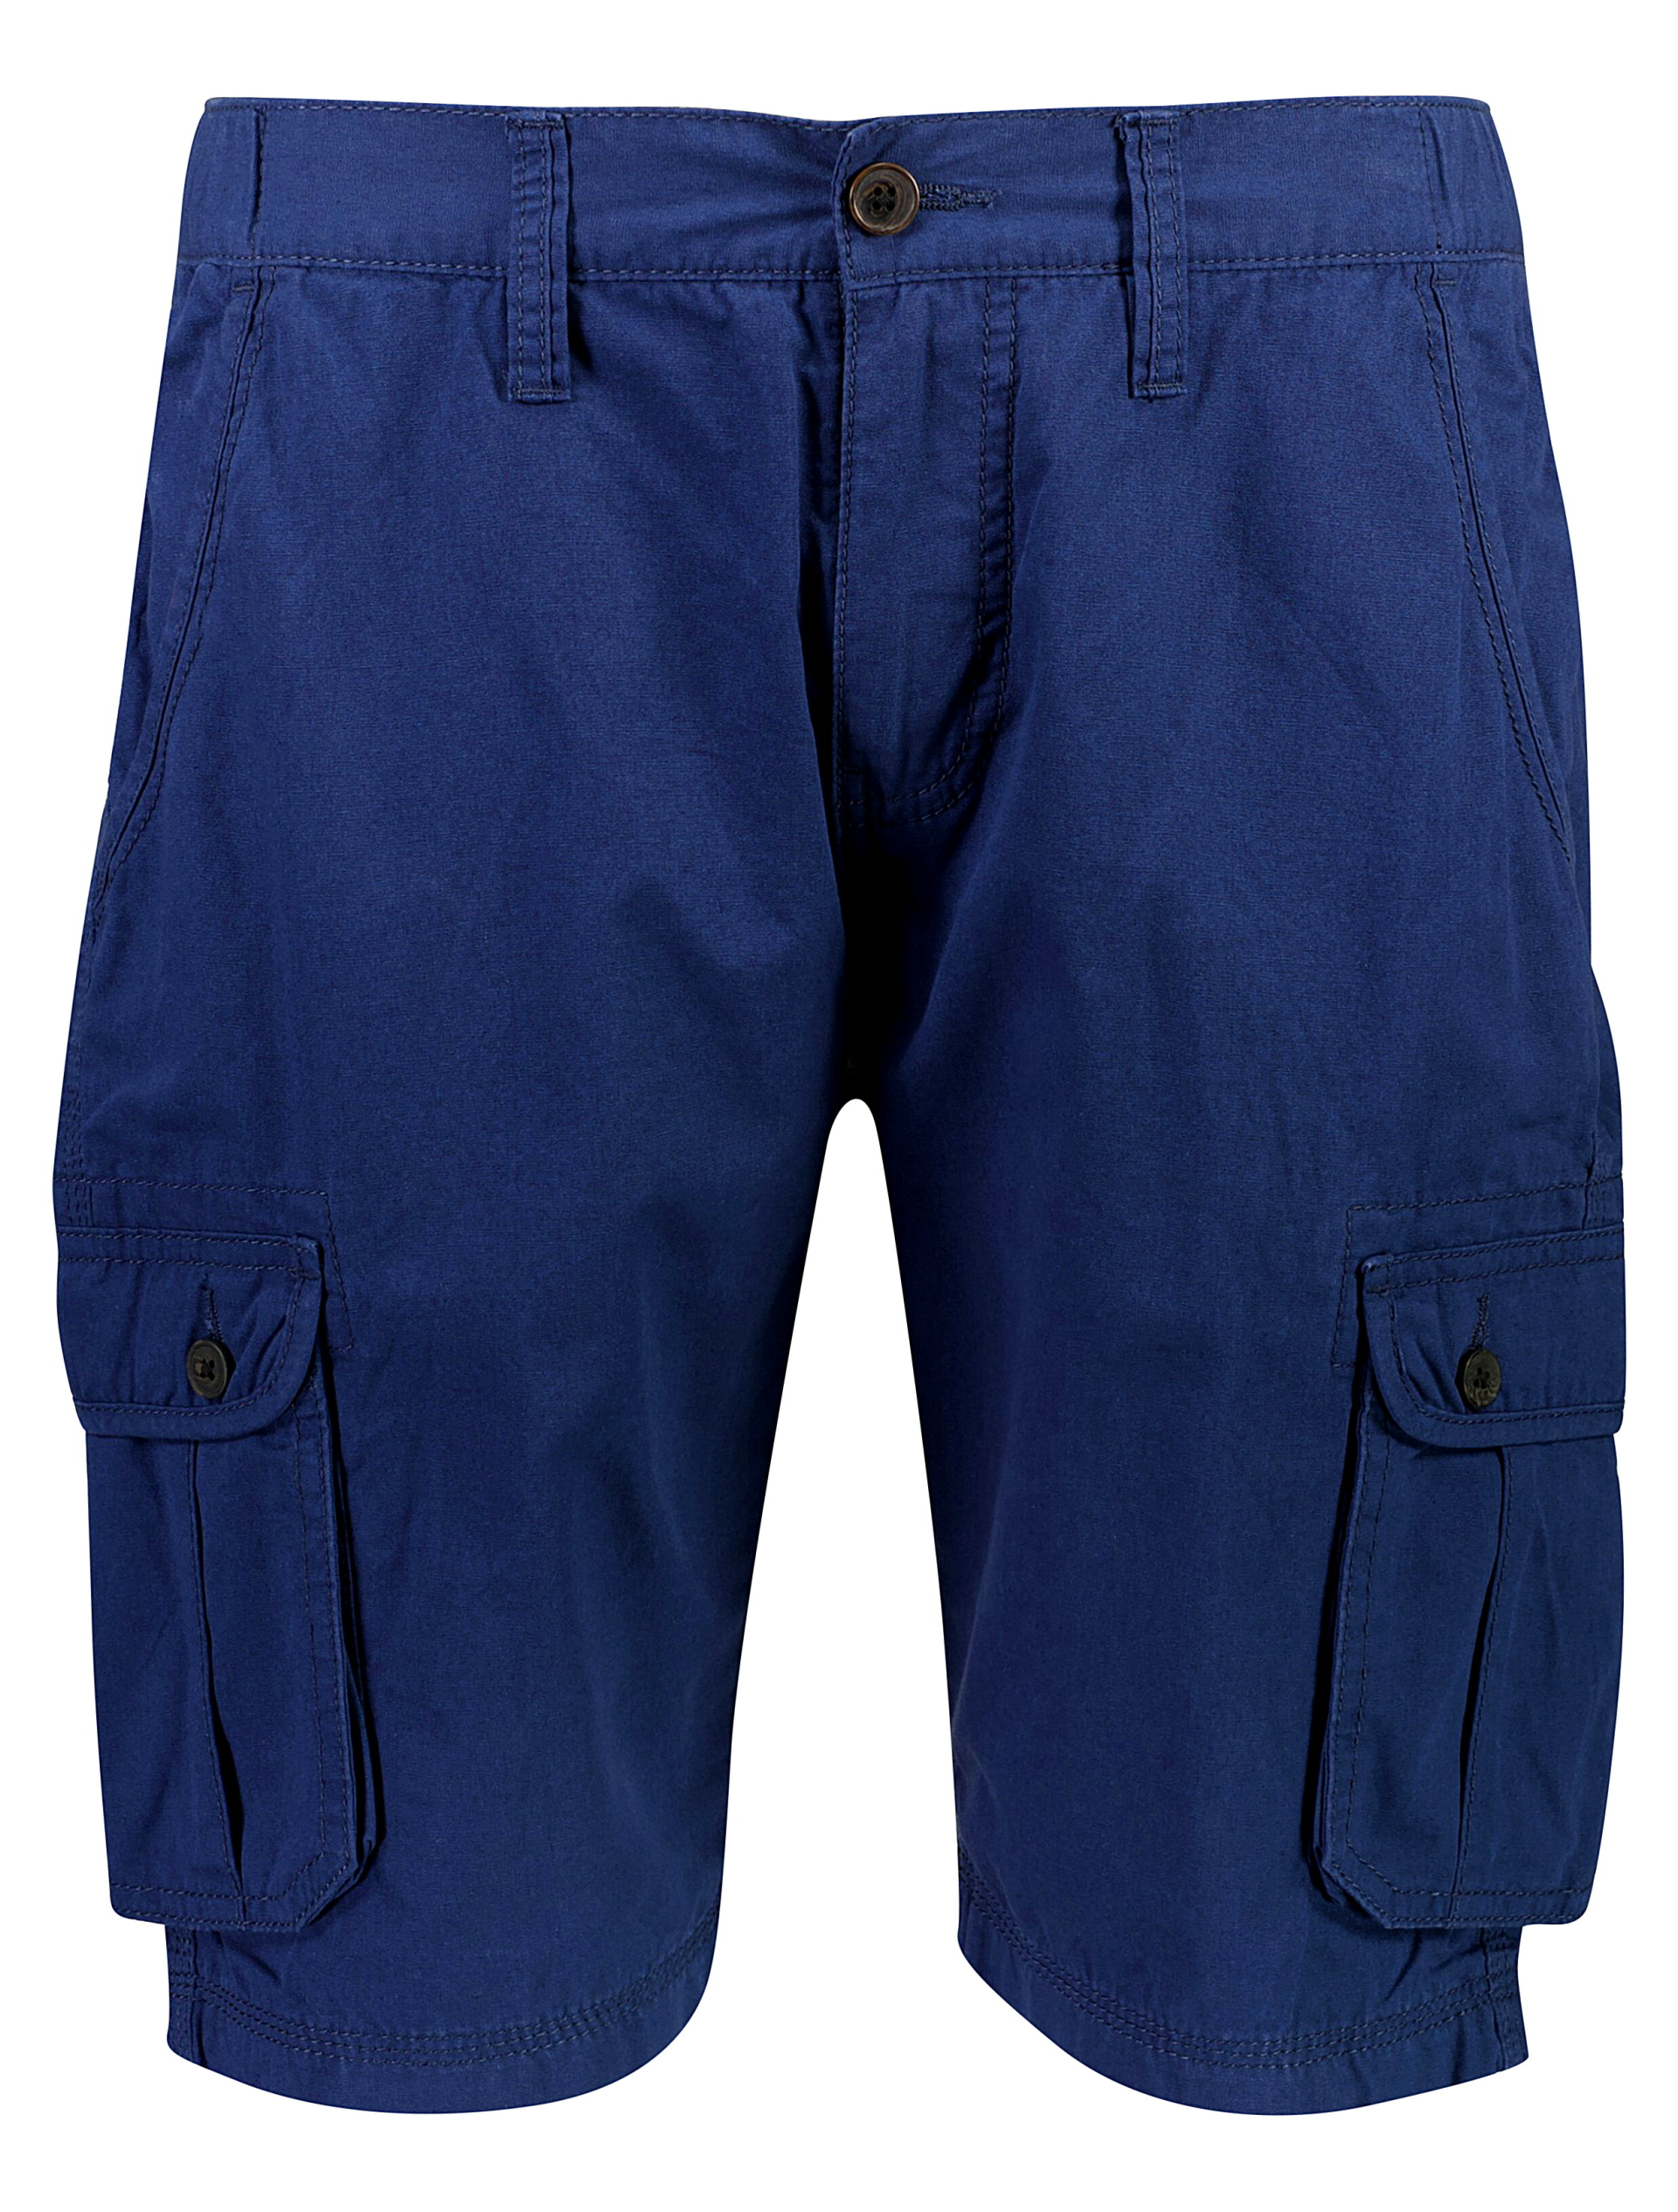 Jack's Cargo shorts blå / denim blue